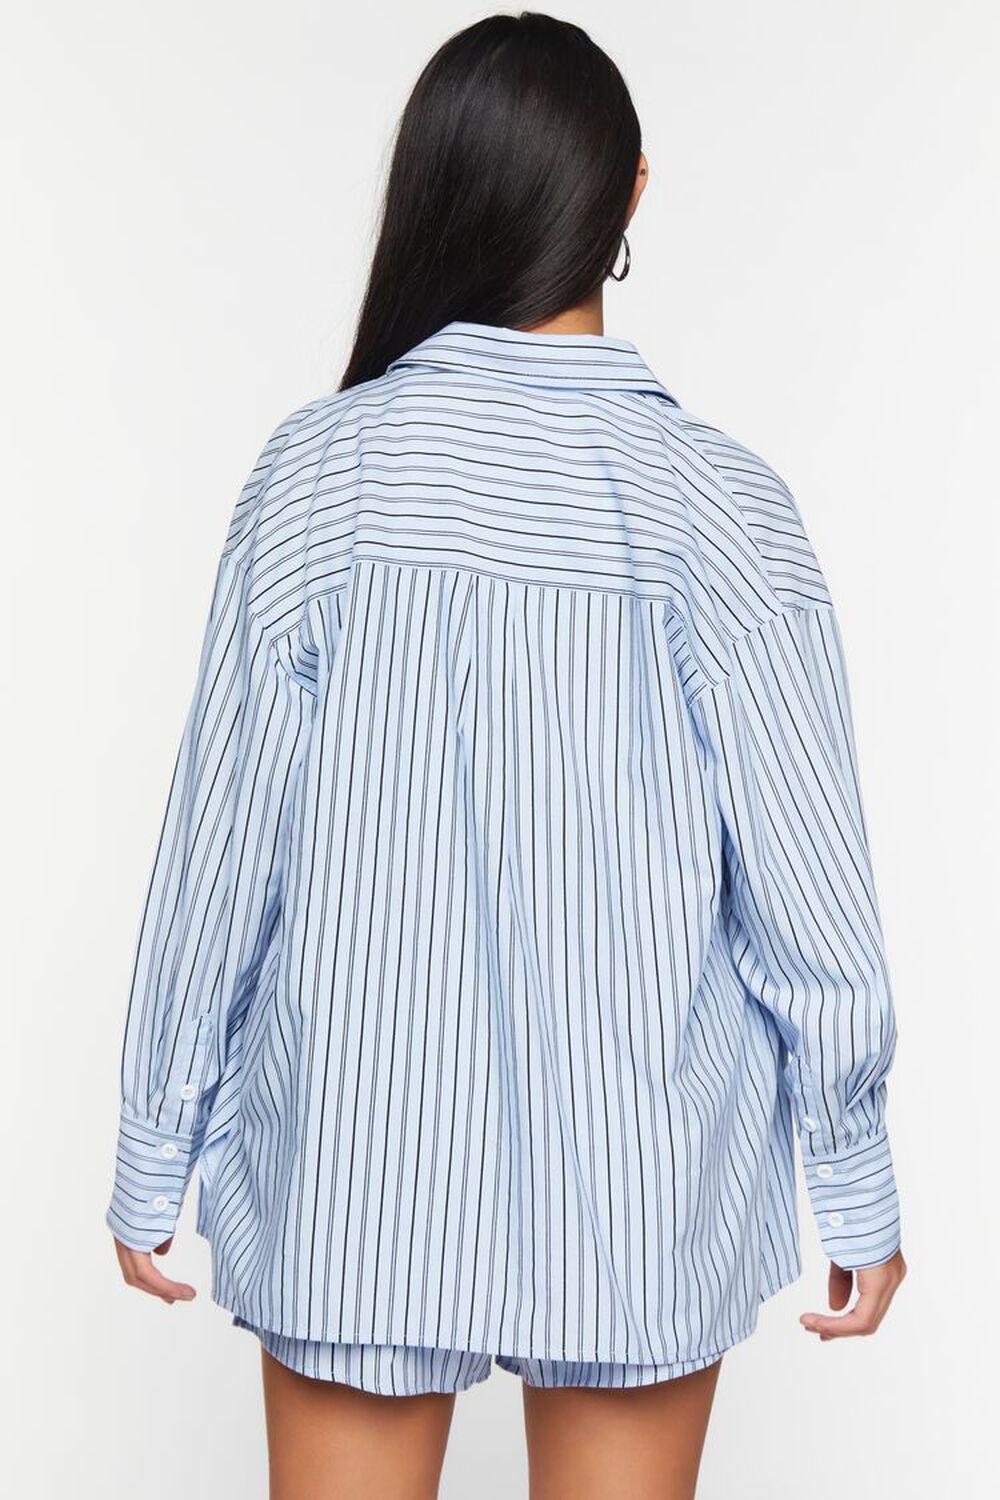 LIGHT BLUE/MULTI Striped Long-Sleeve Shirt & Shorts Set, image 3